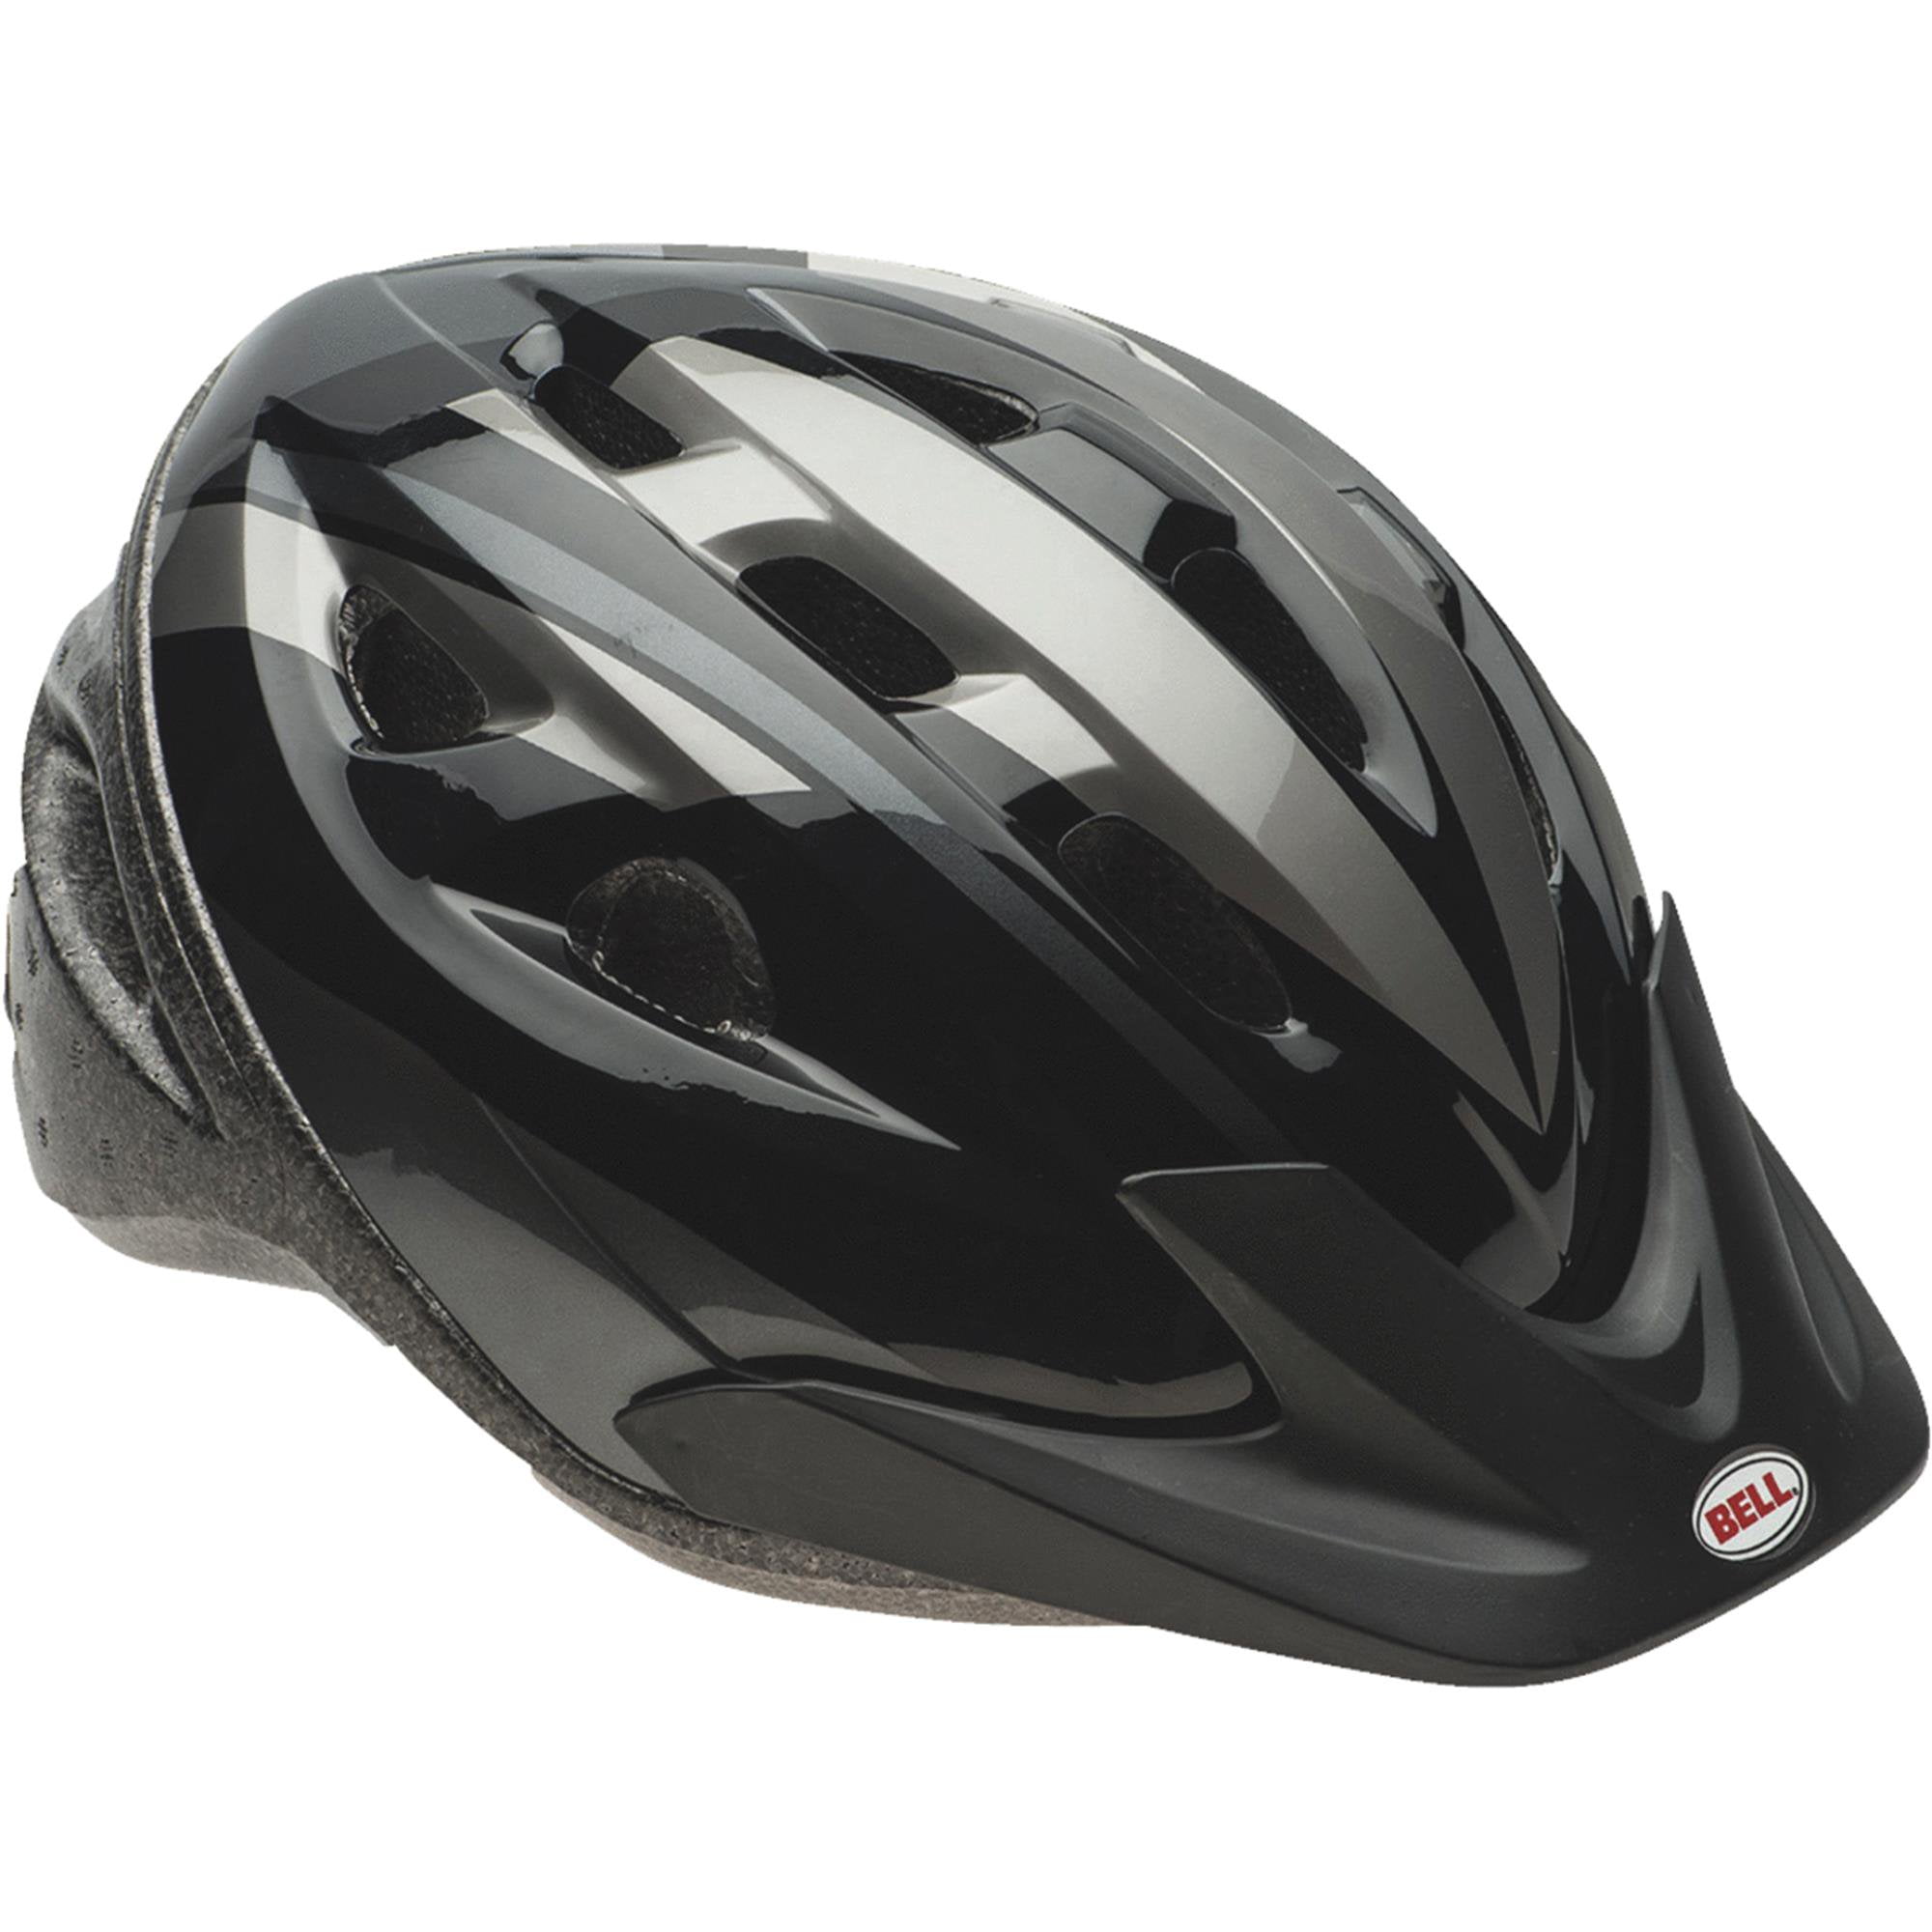 » Animiles Adult Bike Helmet with Safety Rear LED Light 57-61cm Black 